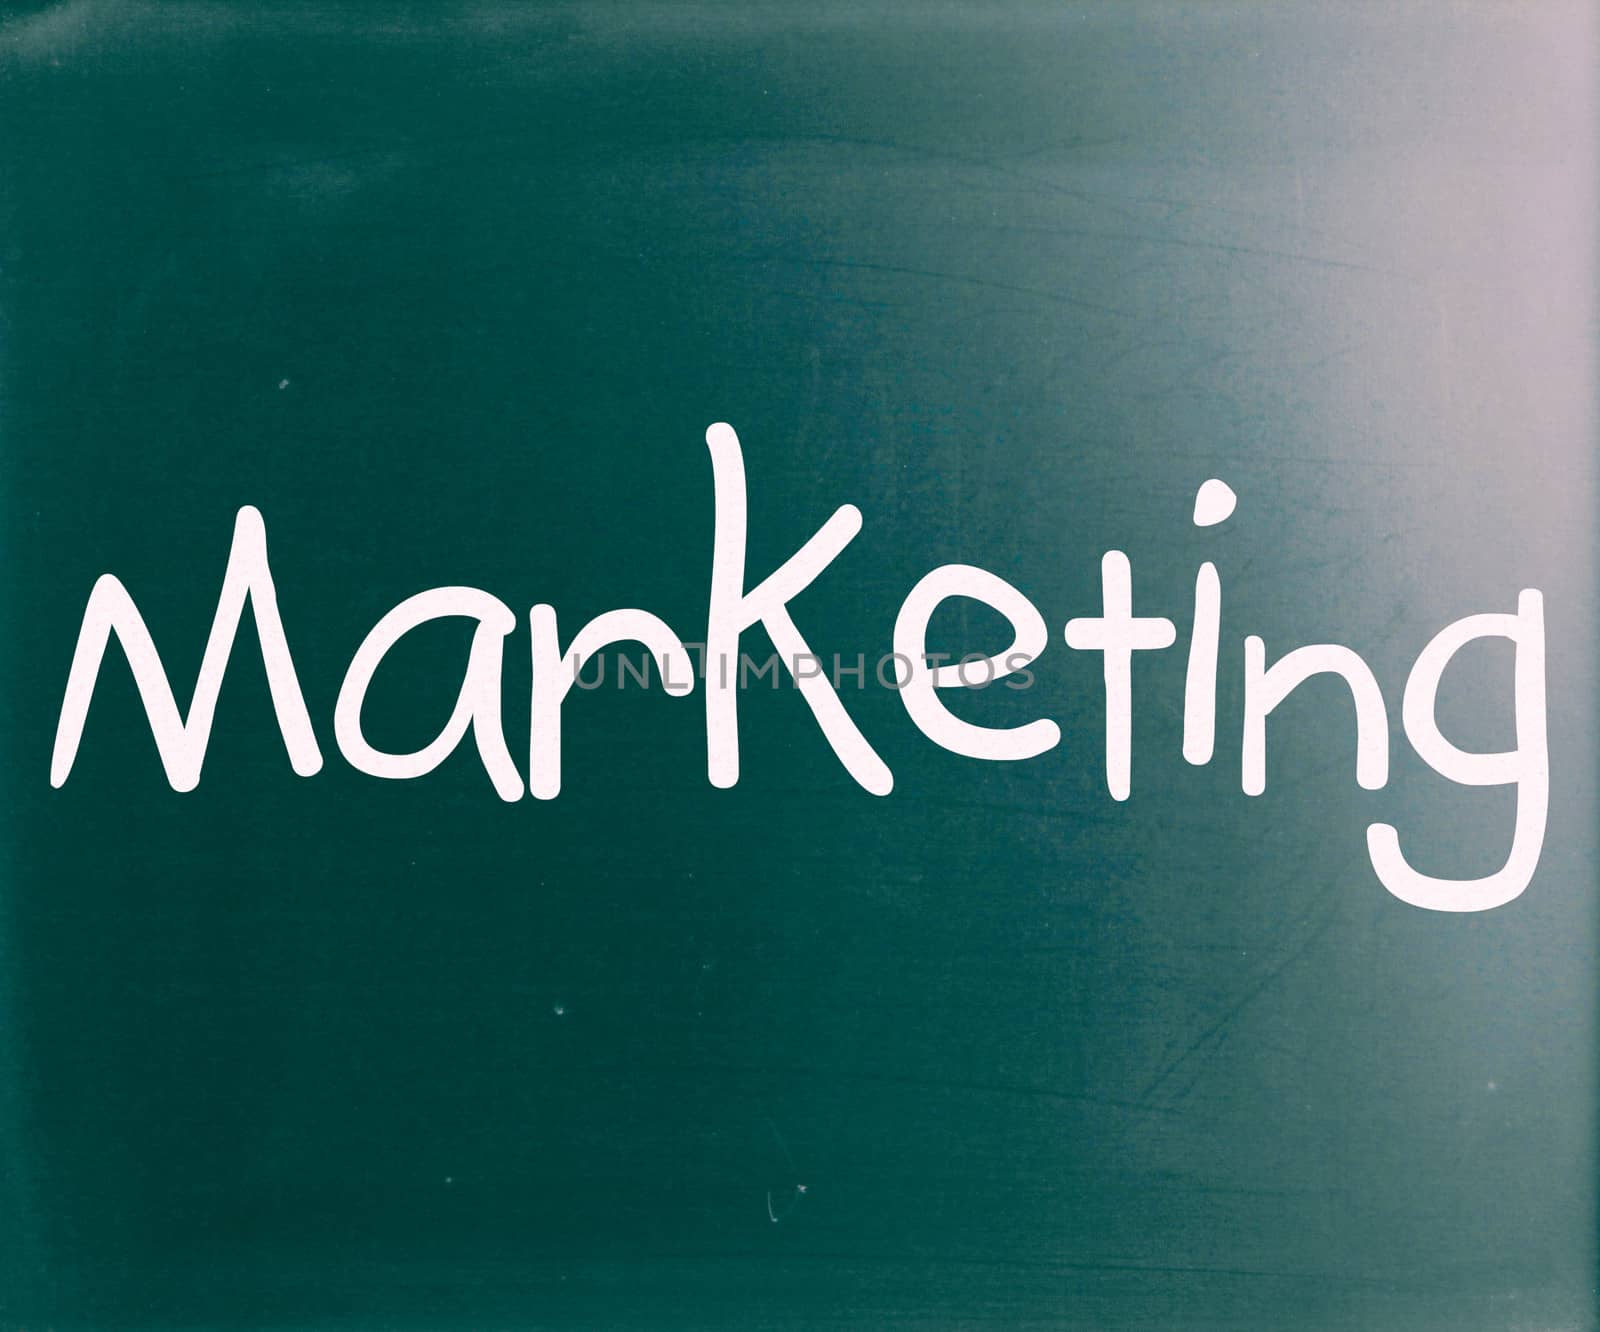 The word "Marketing" handwritten with white chalk on a blackboar by nenov